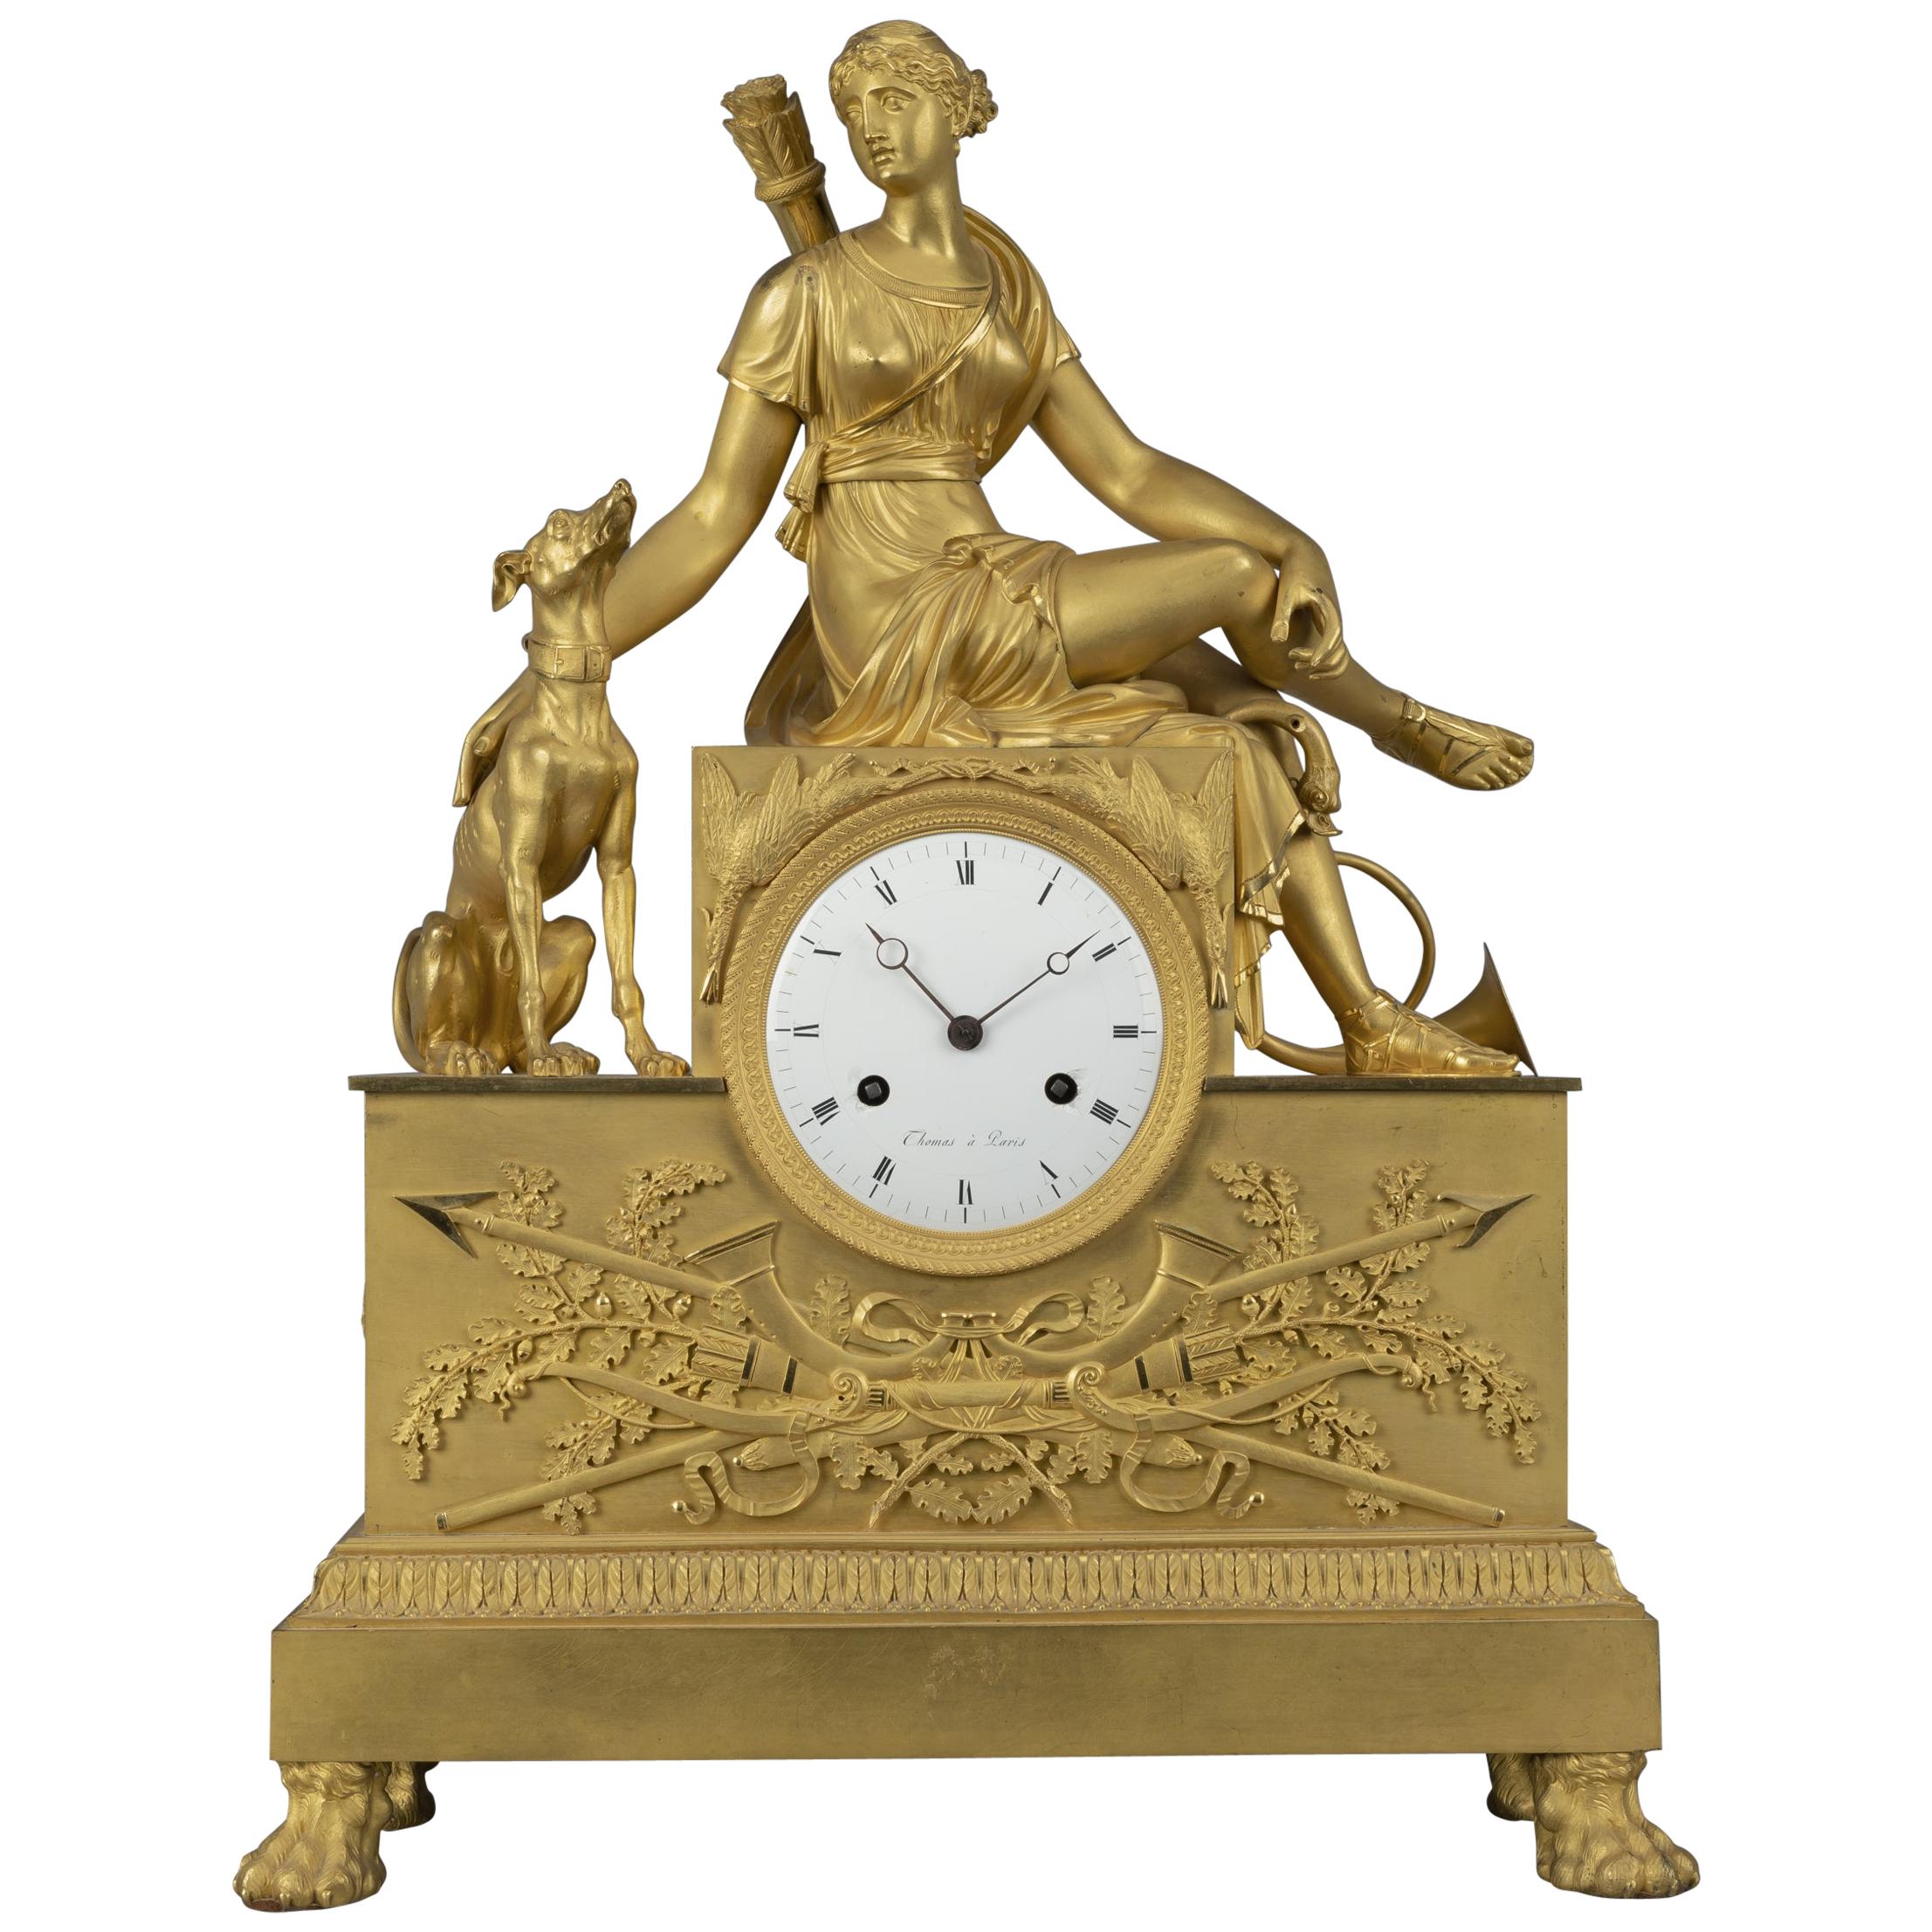 Empire Gilt-Bronze Clock Depicting Diana the Huntress. French, c 1820